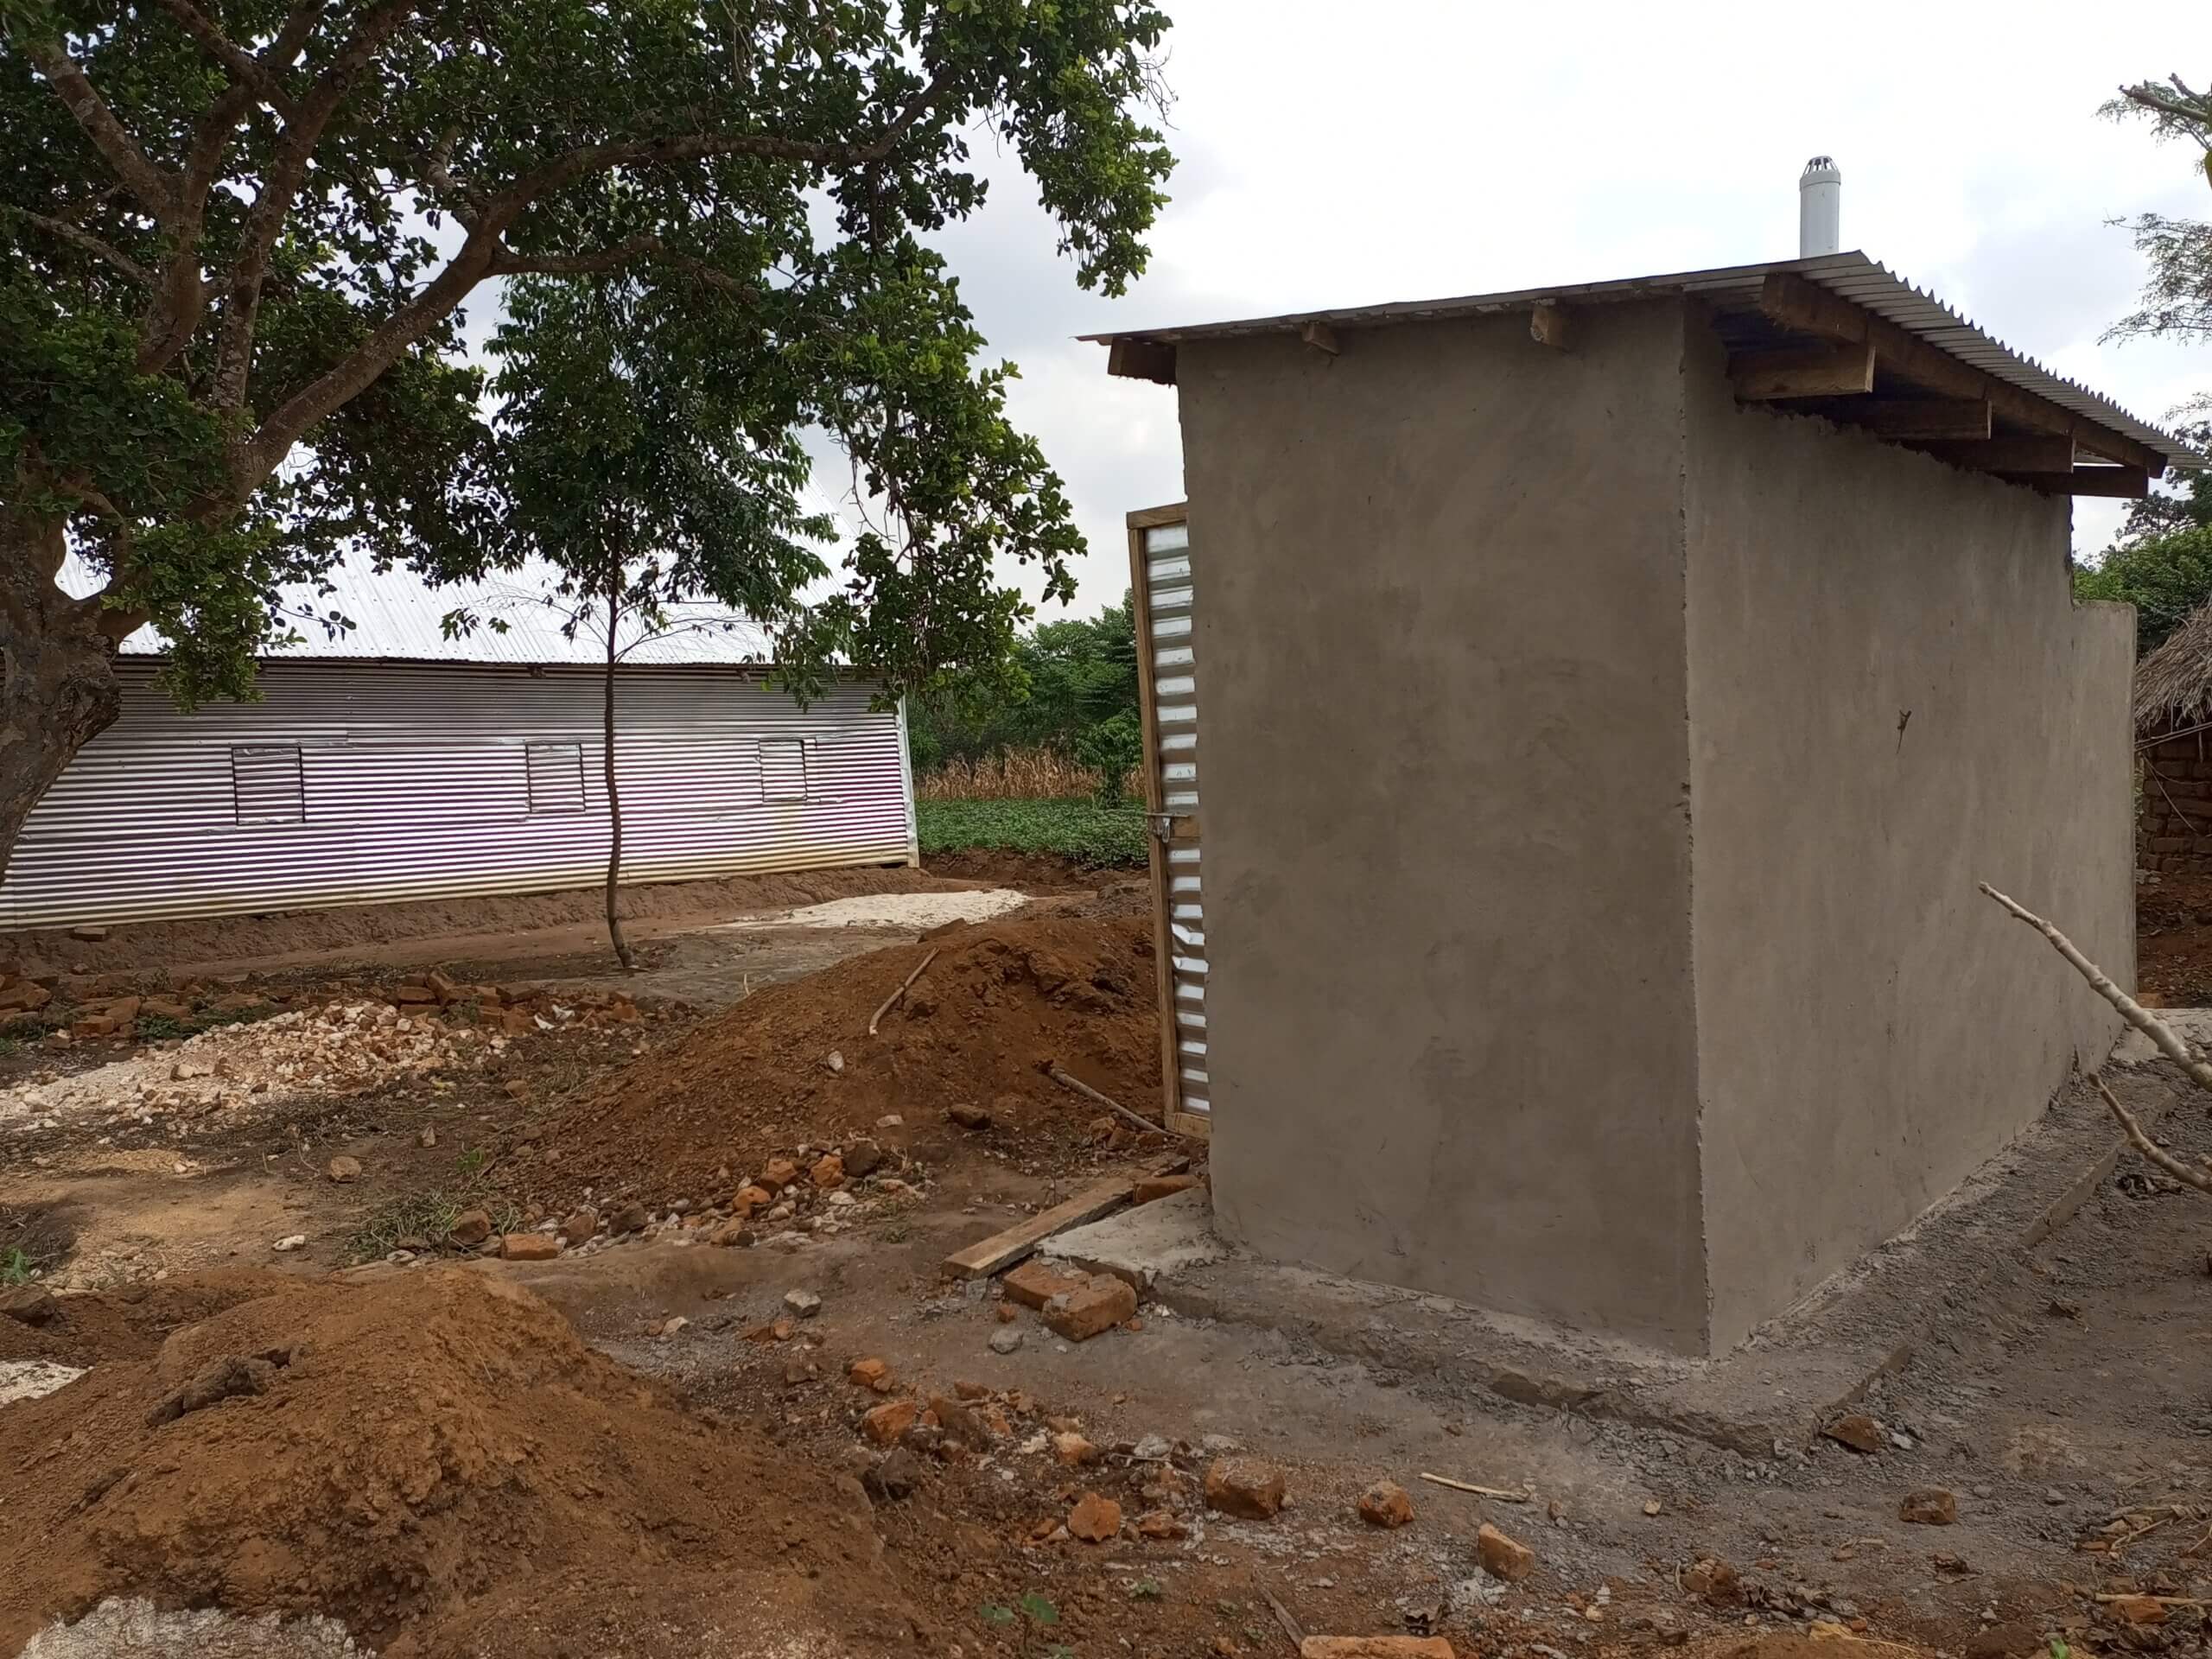 5 Churches in Uganda Receive Sanitary Facilities